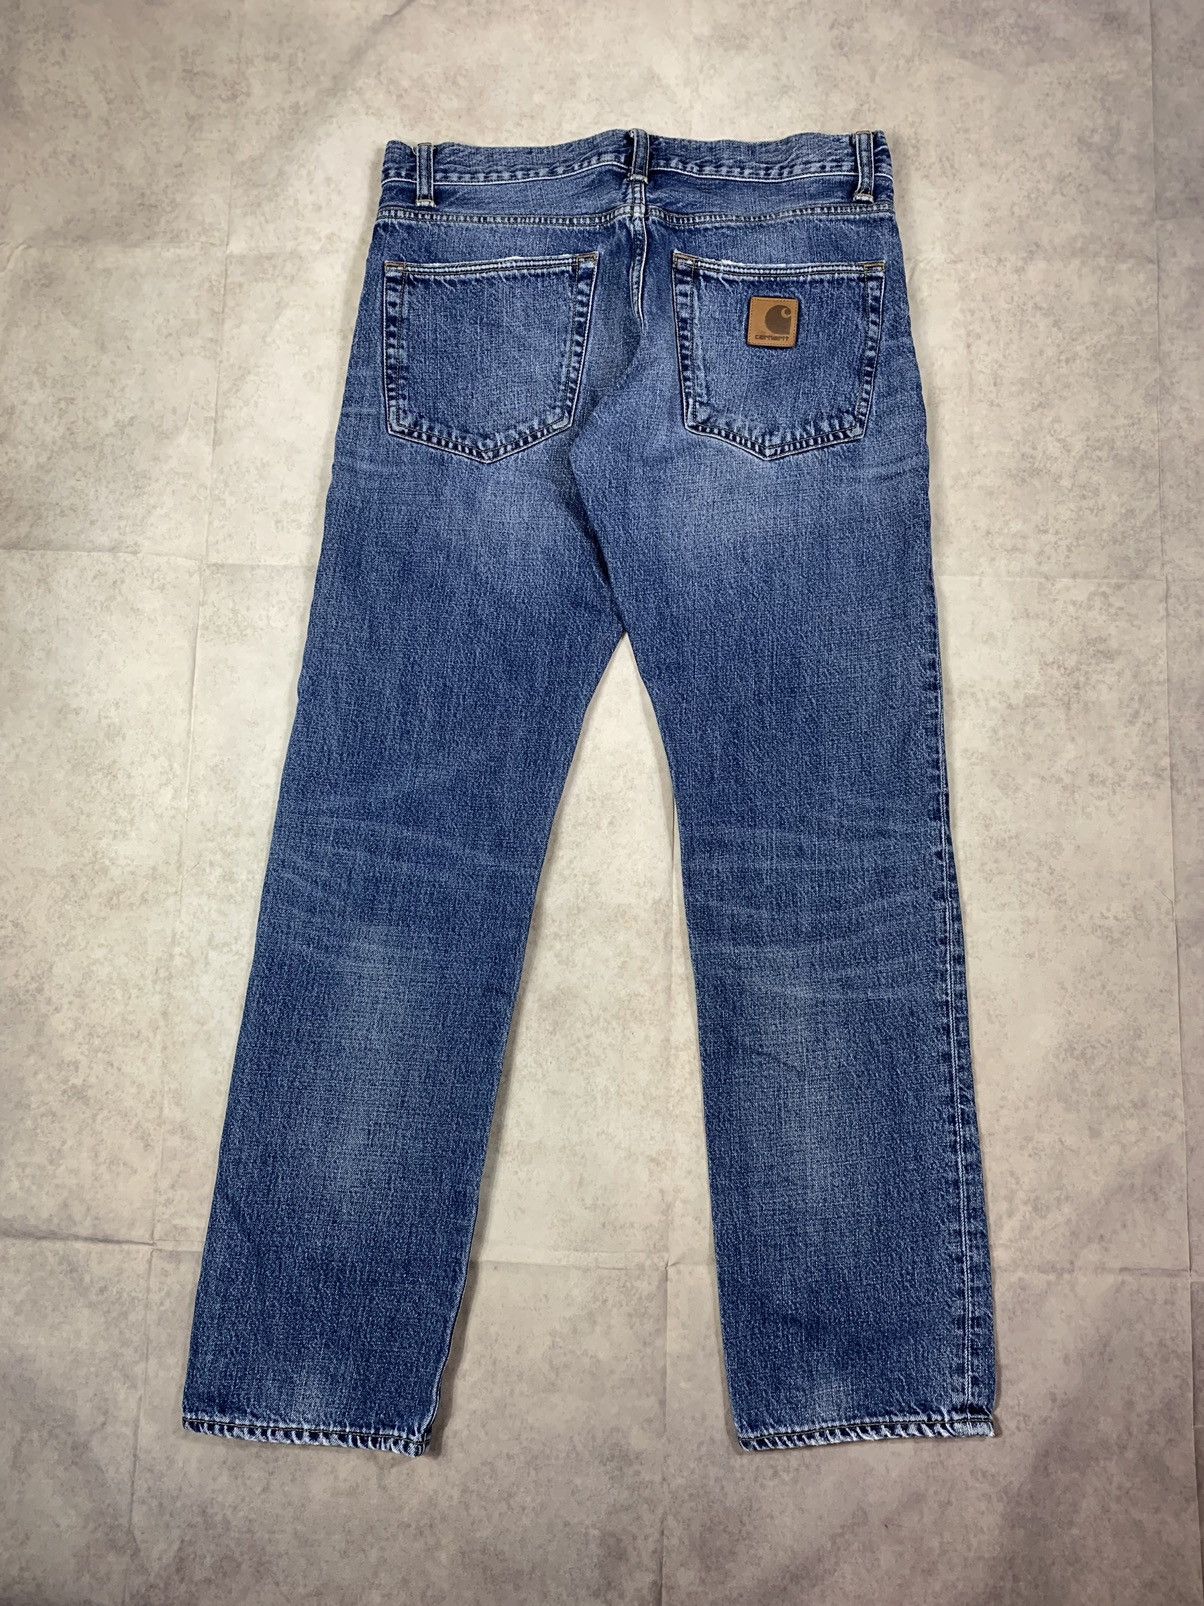 Vintage Carhartt Oakland Pant 32x32 Denim Jeans Pants Logo | Grailed